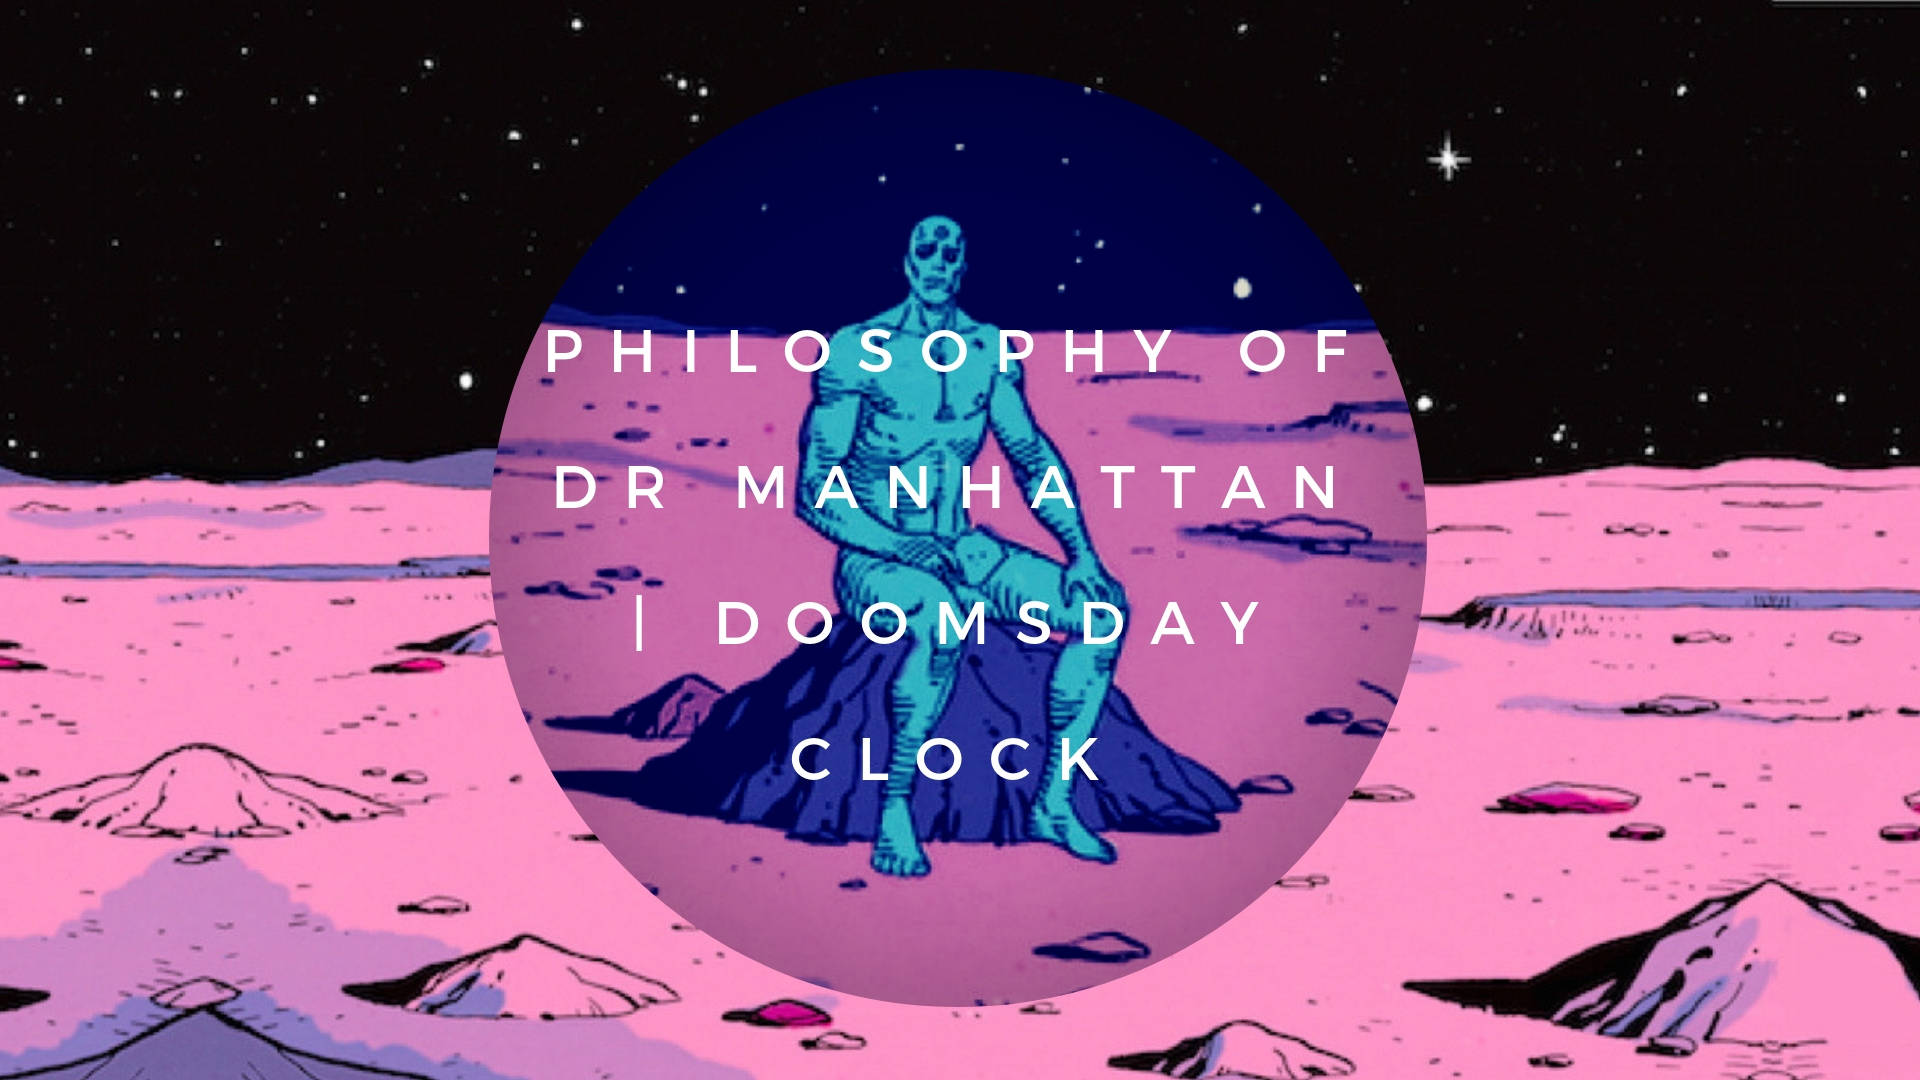 Wallpaper - Doktor Manhattan Filosofi Doomsday Clock Wallpaper Wallpaper